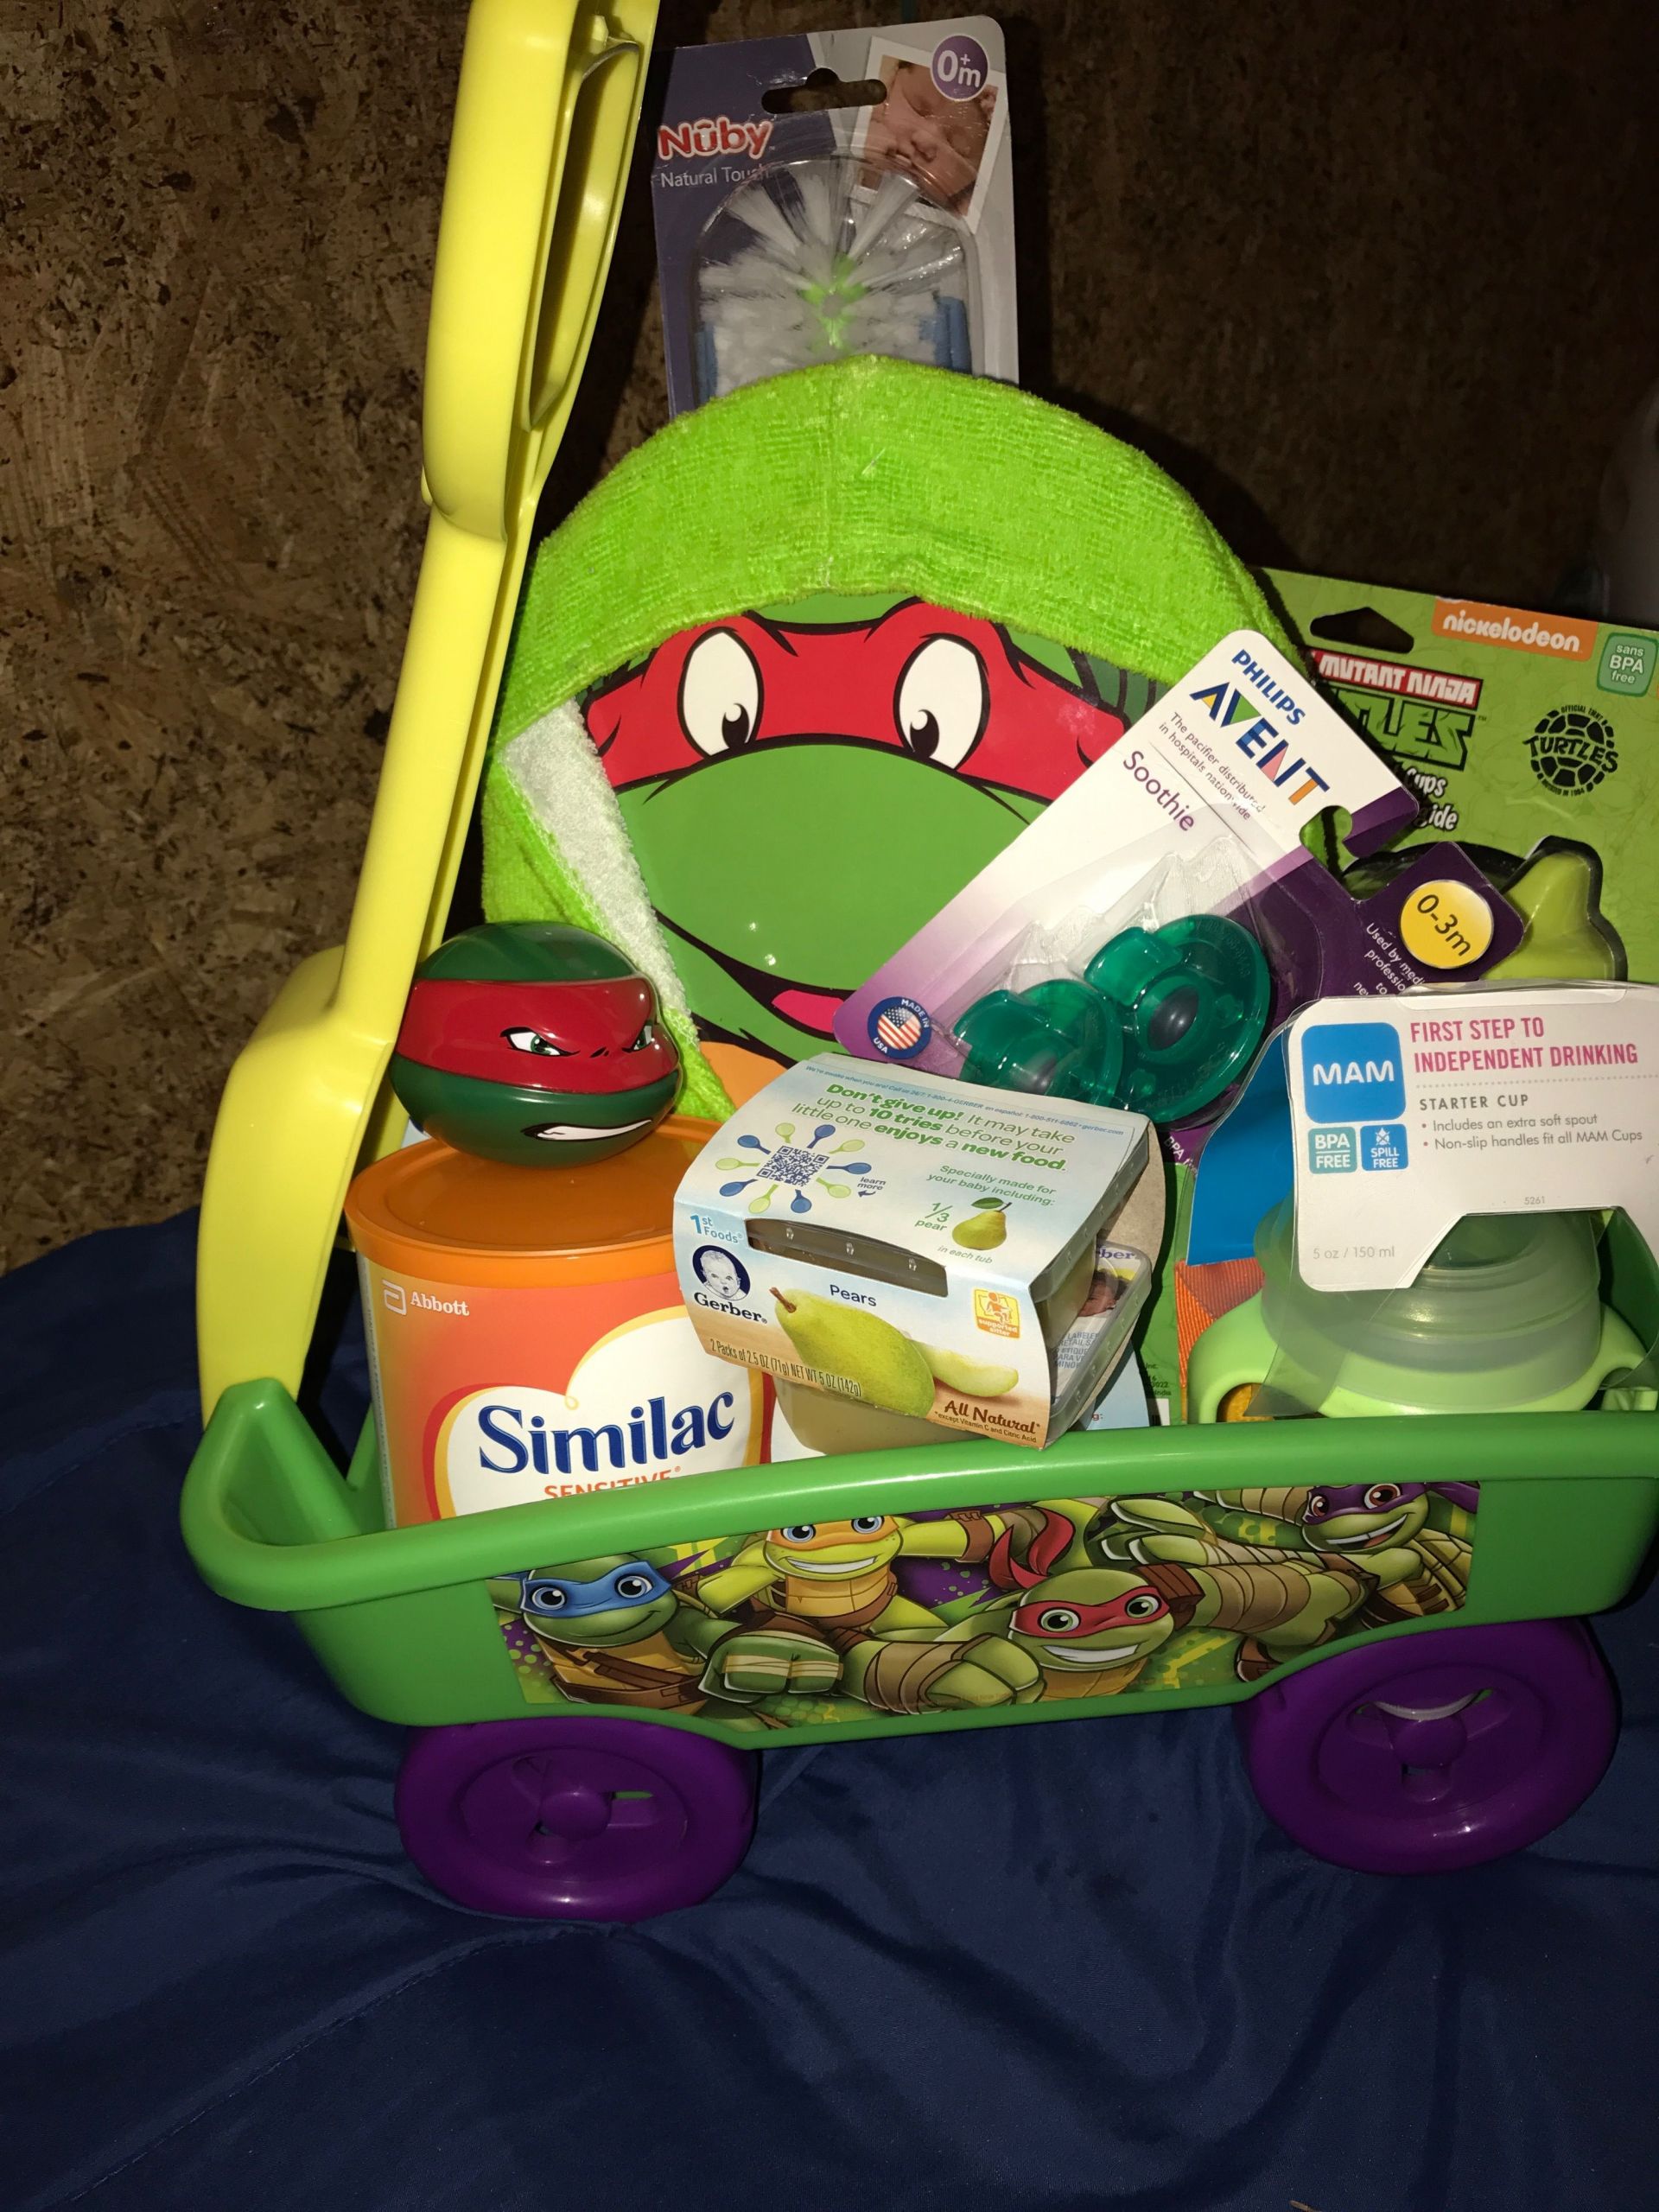 Ninja Turtle Easter Basket Ideas
 Ninja Turtles Easter basket for a 6 month baby boy